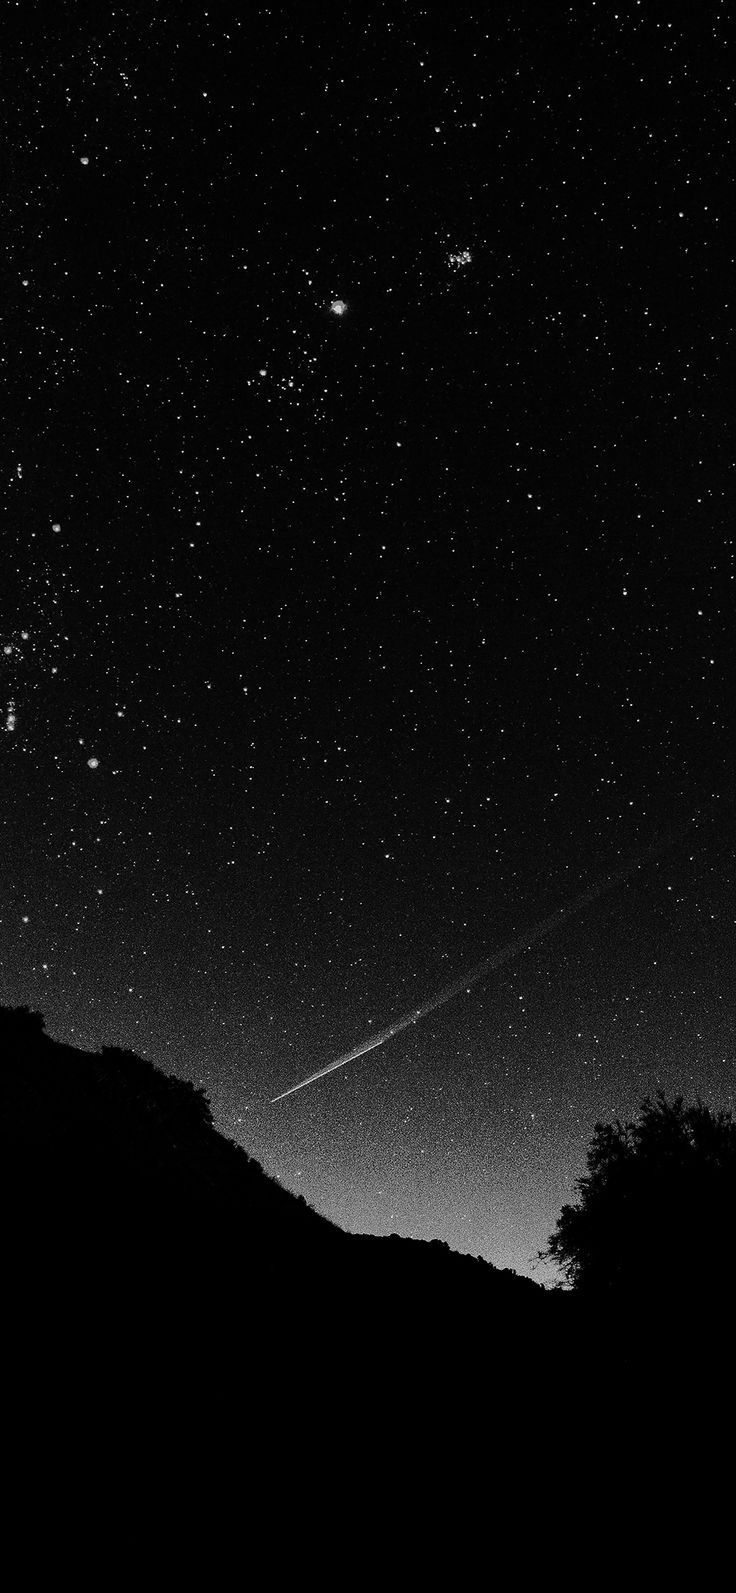  Dunkles Hintergrundbild 736x1593. Astronomy Space Black Sky Night Beautiful Falling Star Via IPhoneXpapers.co. #iPhoneXp. Night Sky Wallpaper, White Wallpaper For Iphone, Dark Wallpaper